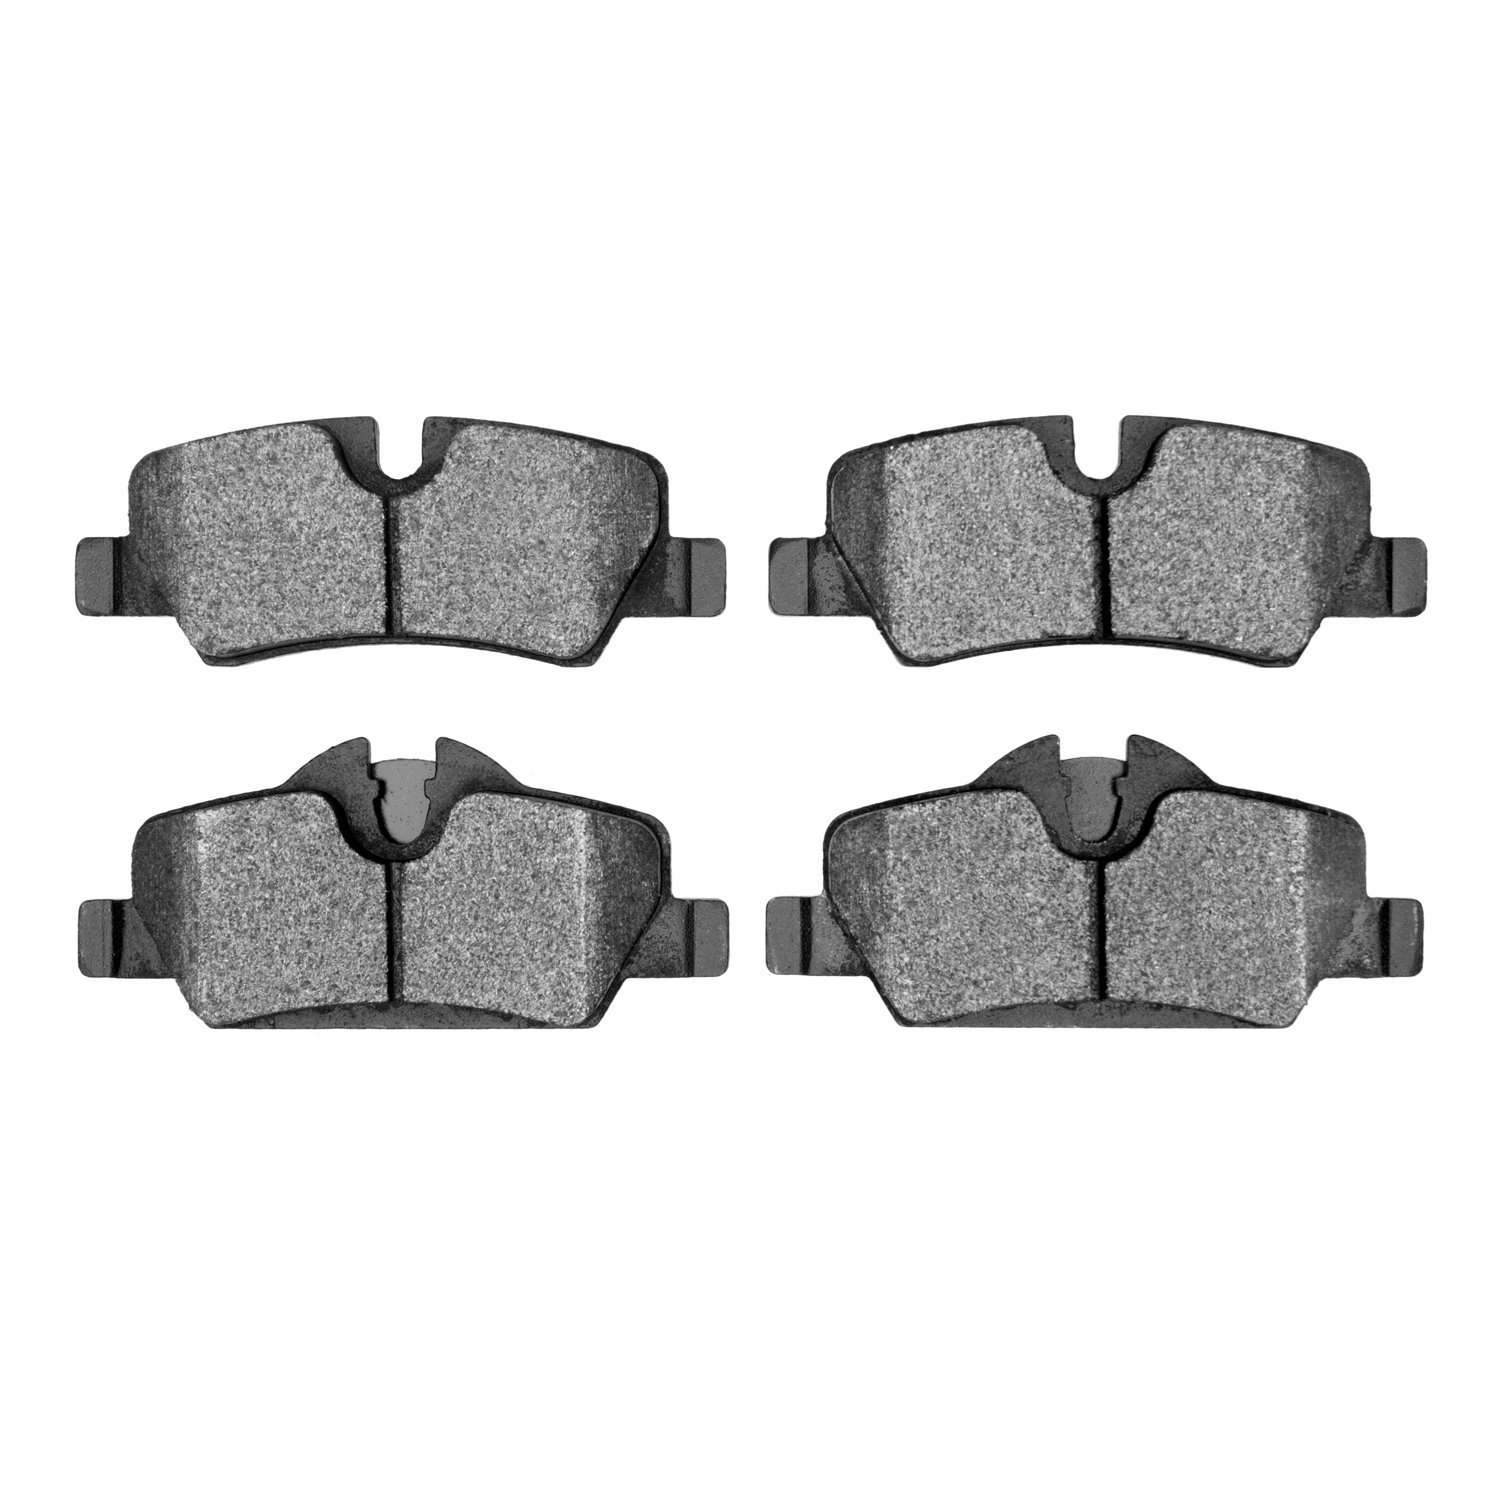 1600-1800-00 5000 Euro Ceramic Brake Pads, Fits Select Mini, Position: Rear